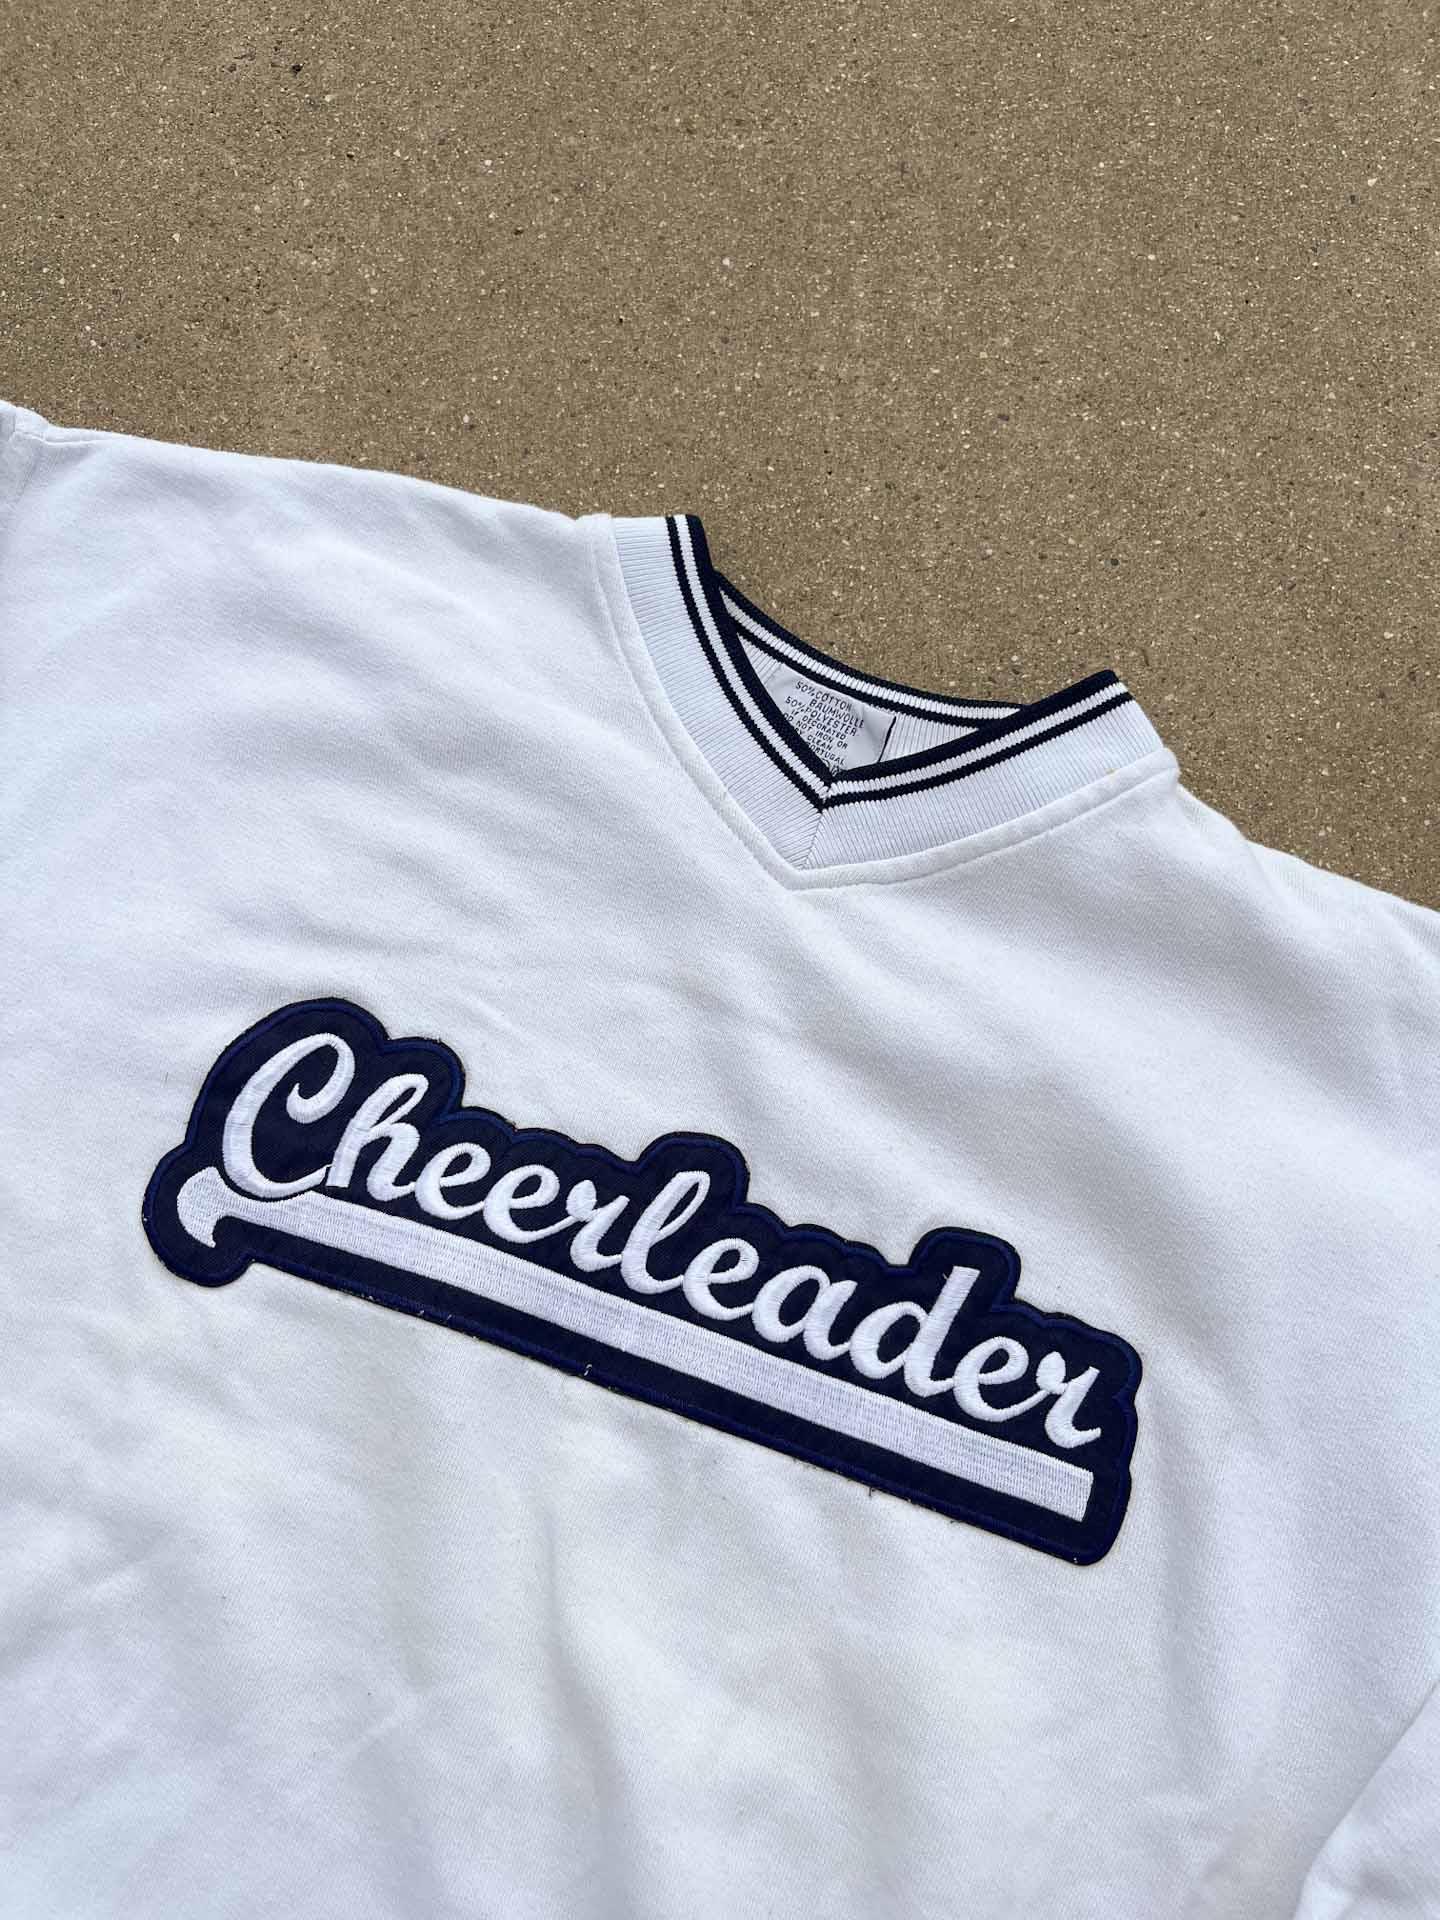 Cheerleader Sweater - secondvintage